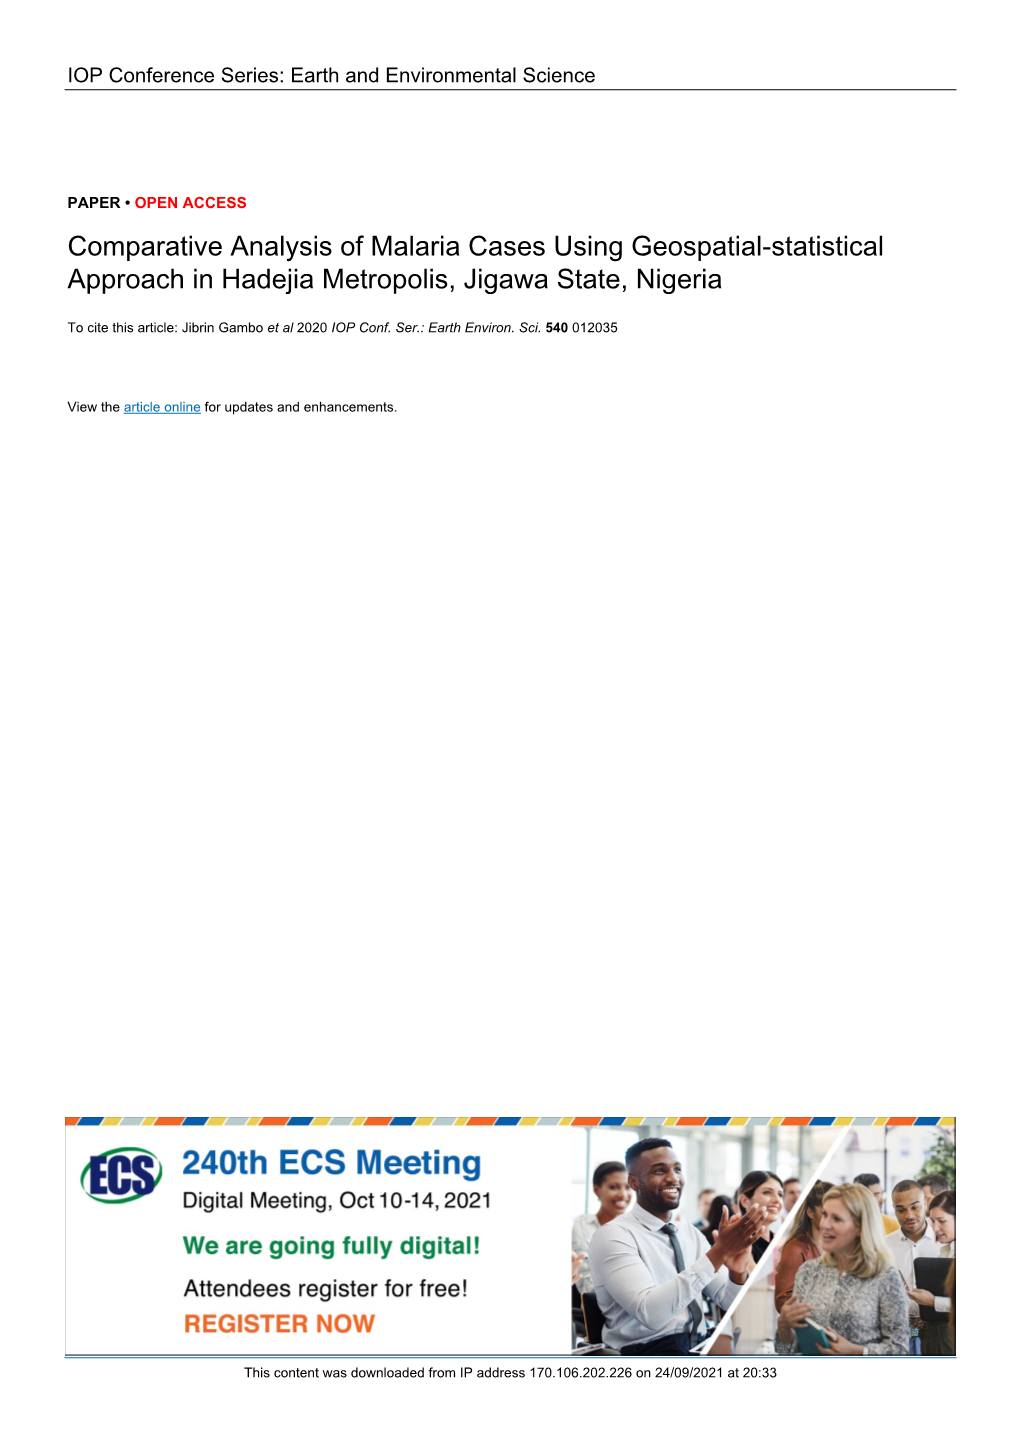 Comparative Analysis of Malaria Cases Using Geospatial-Statistical Approach in Hadejia Metropolis, Jigawa State, Nigeria